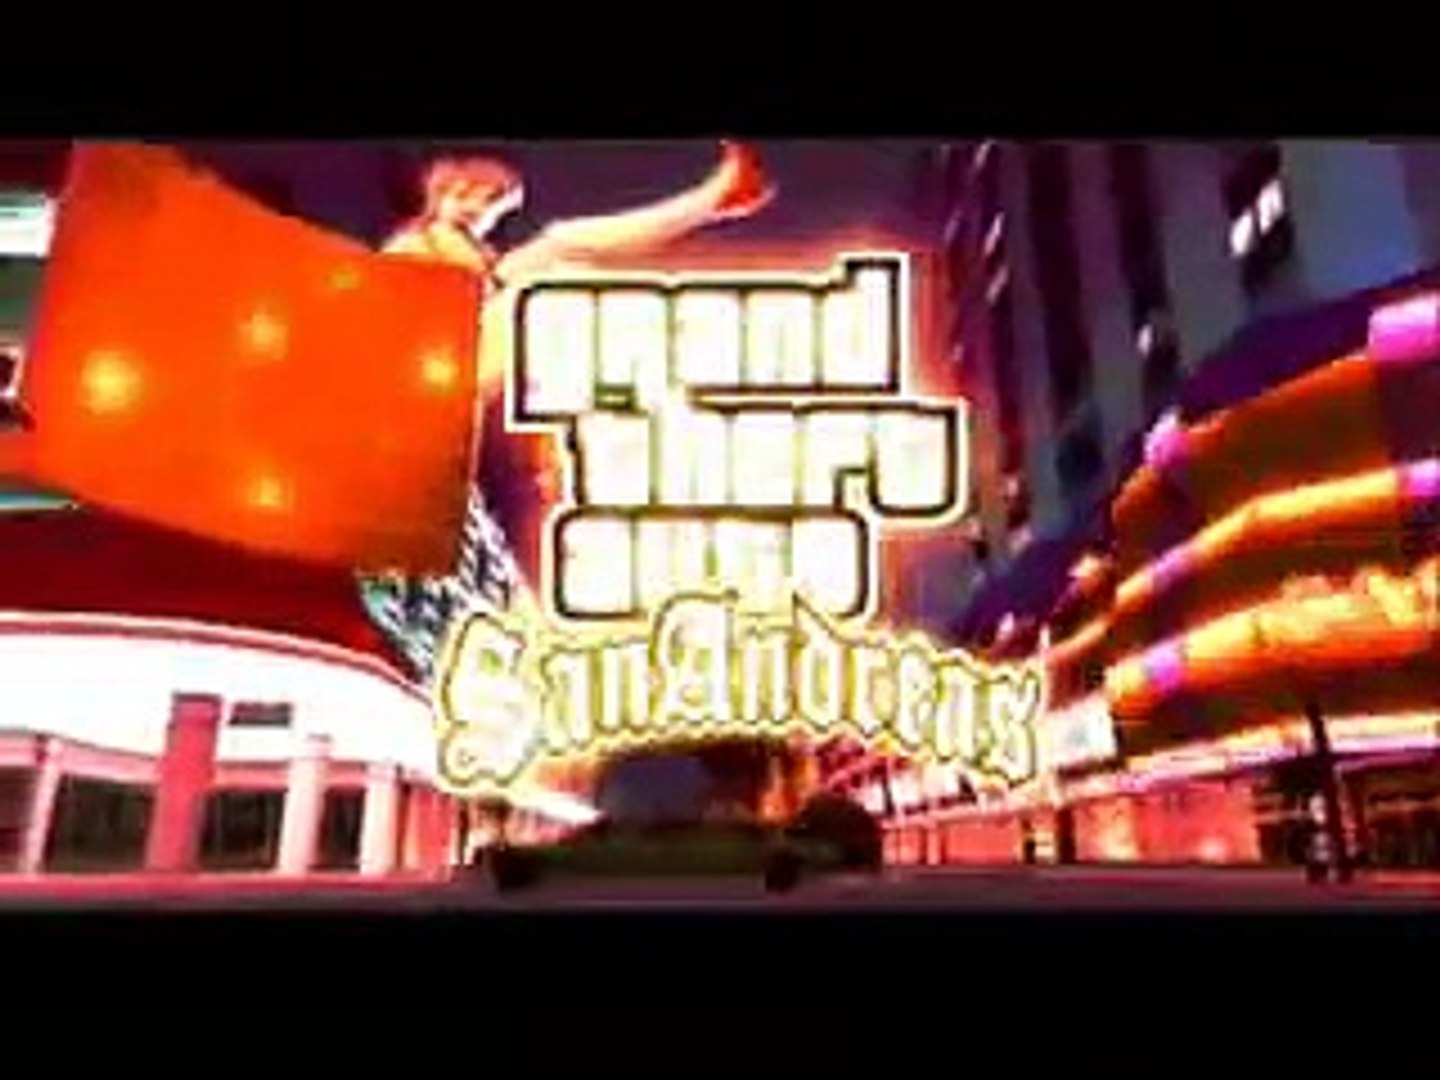 GTA San Andreas All Cheat Codes PC PS2 Xbox - video Dailymotion